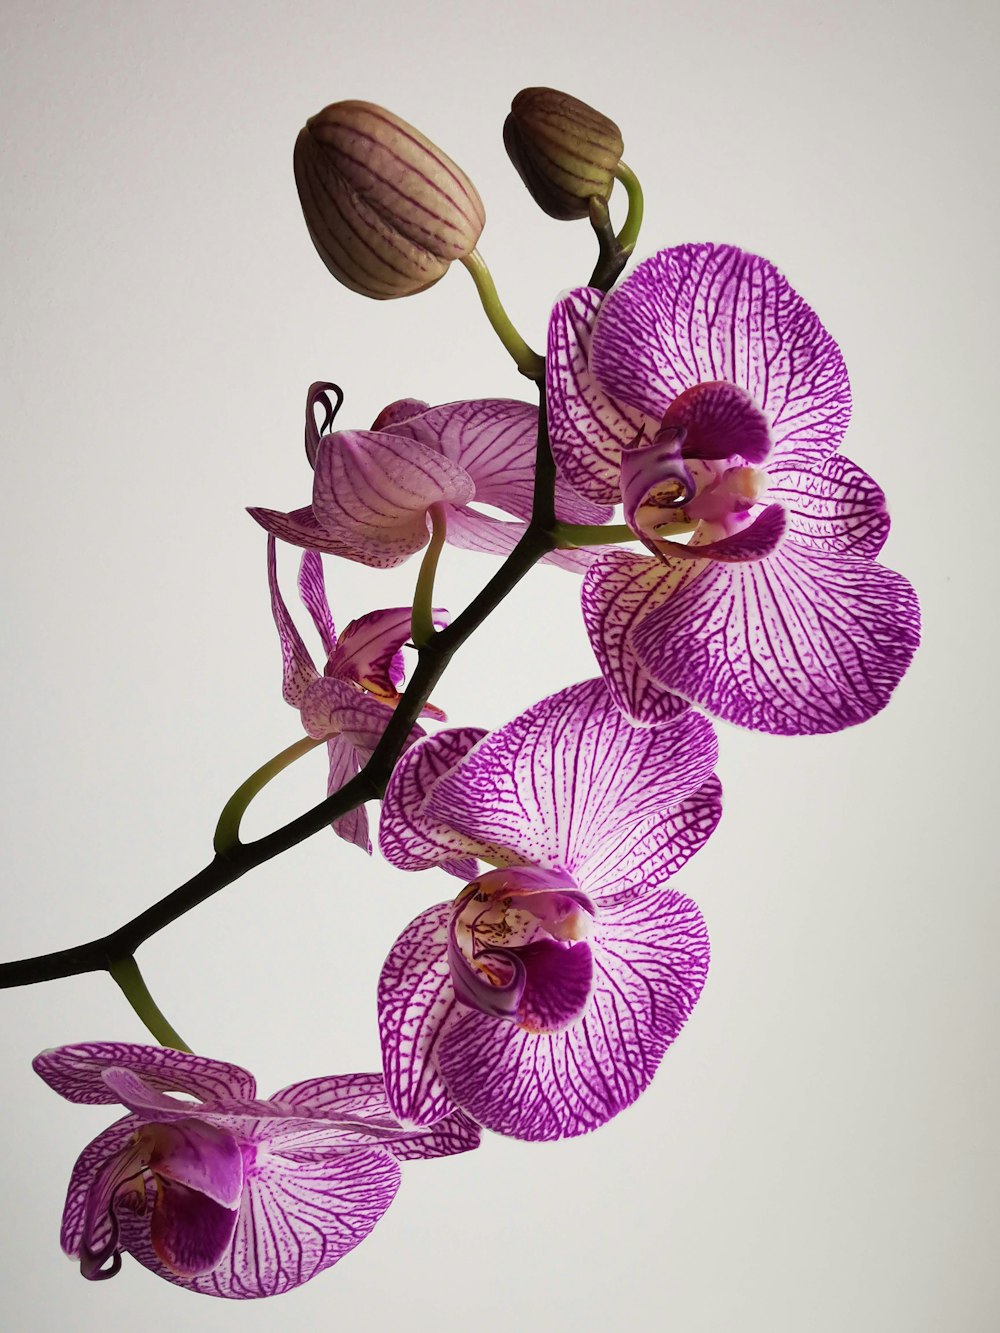 Flor Da Orquídea Fotos | Baixe imagens gratuitas na Unsplash